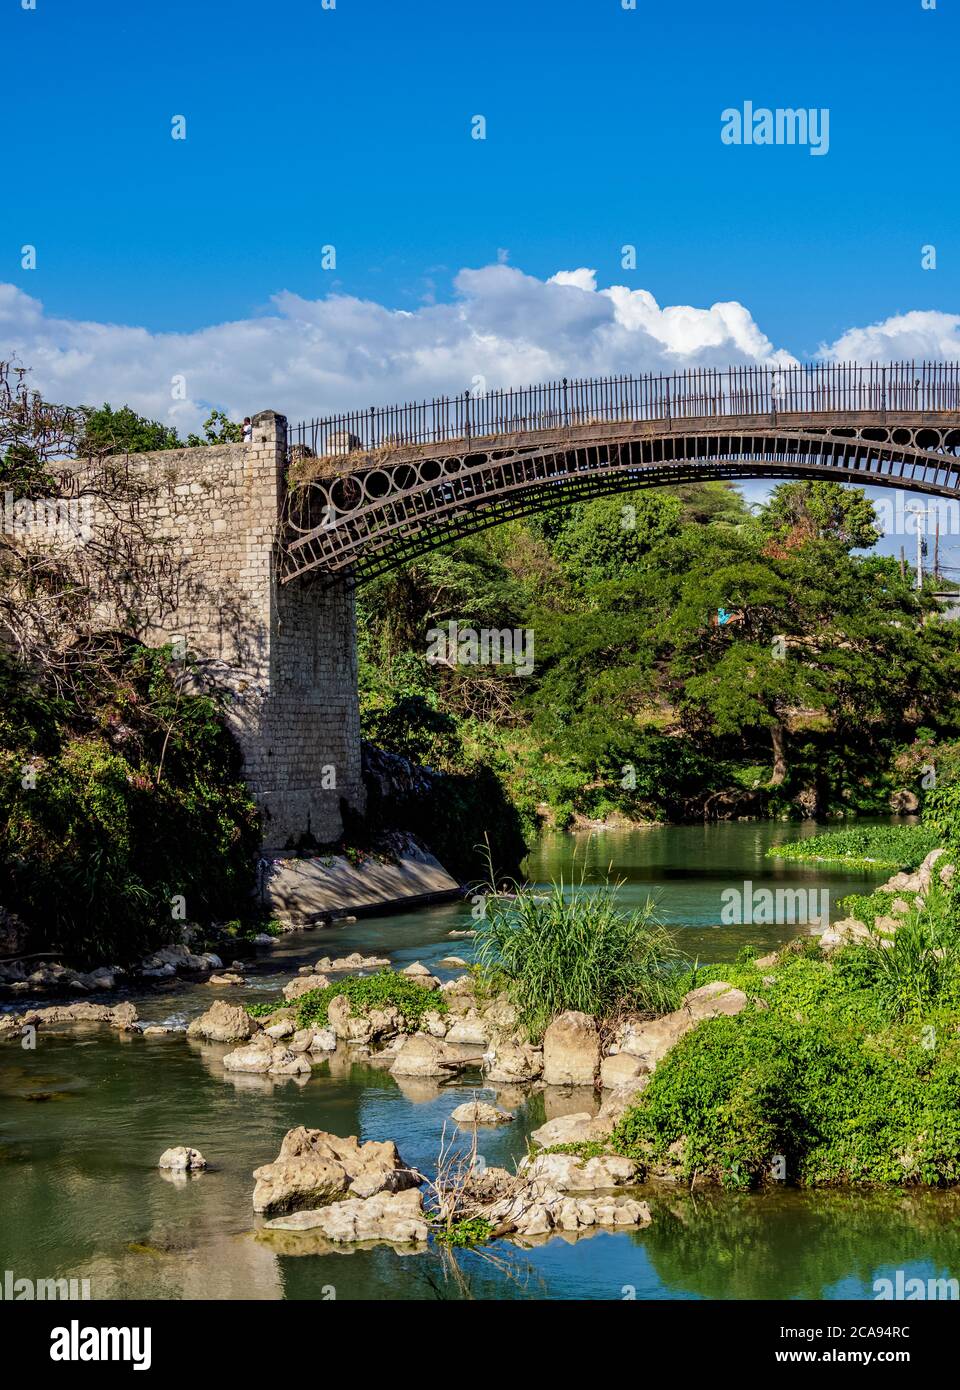 Old Iron Bridge, Città Spagnola, Parrocchia di Santa Caterina, Giamaica, Indie Occidentali, Caraibi, America Centrale Foto Stock